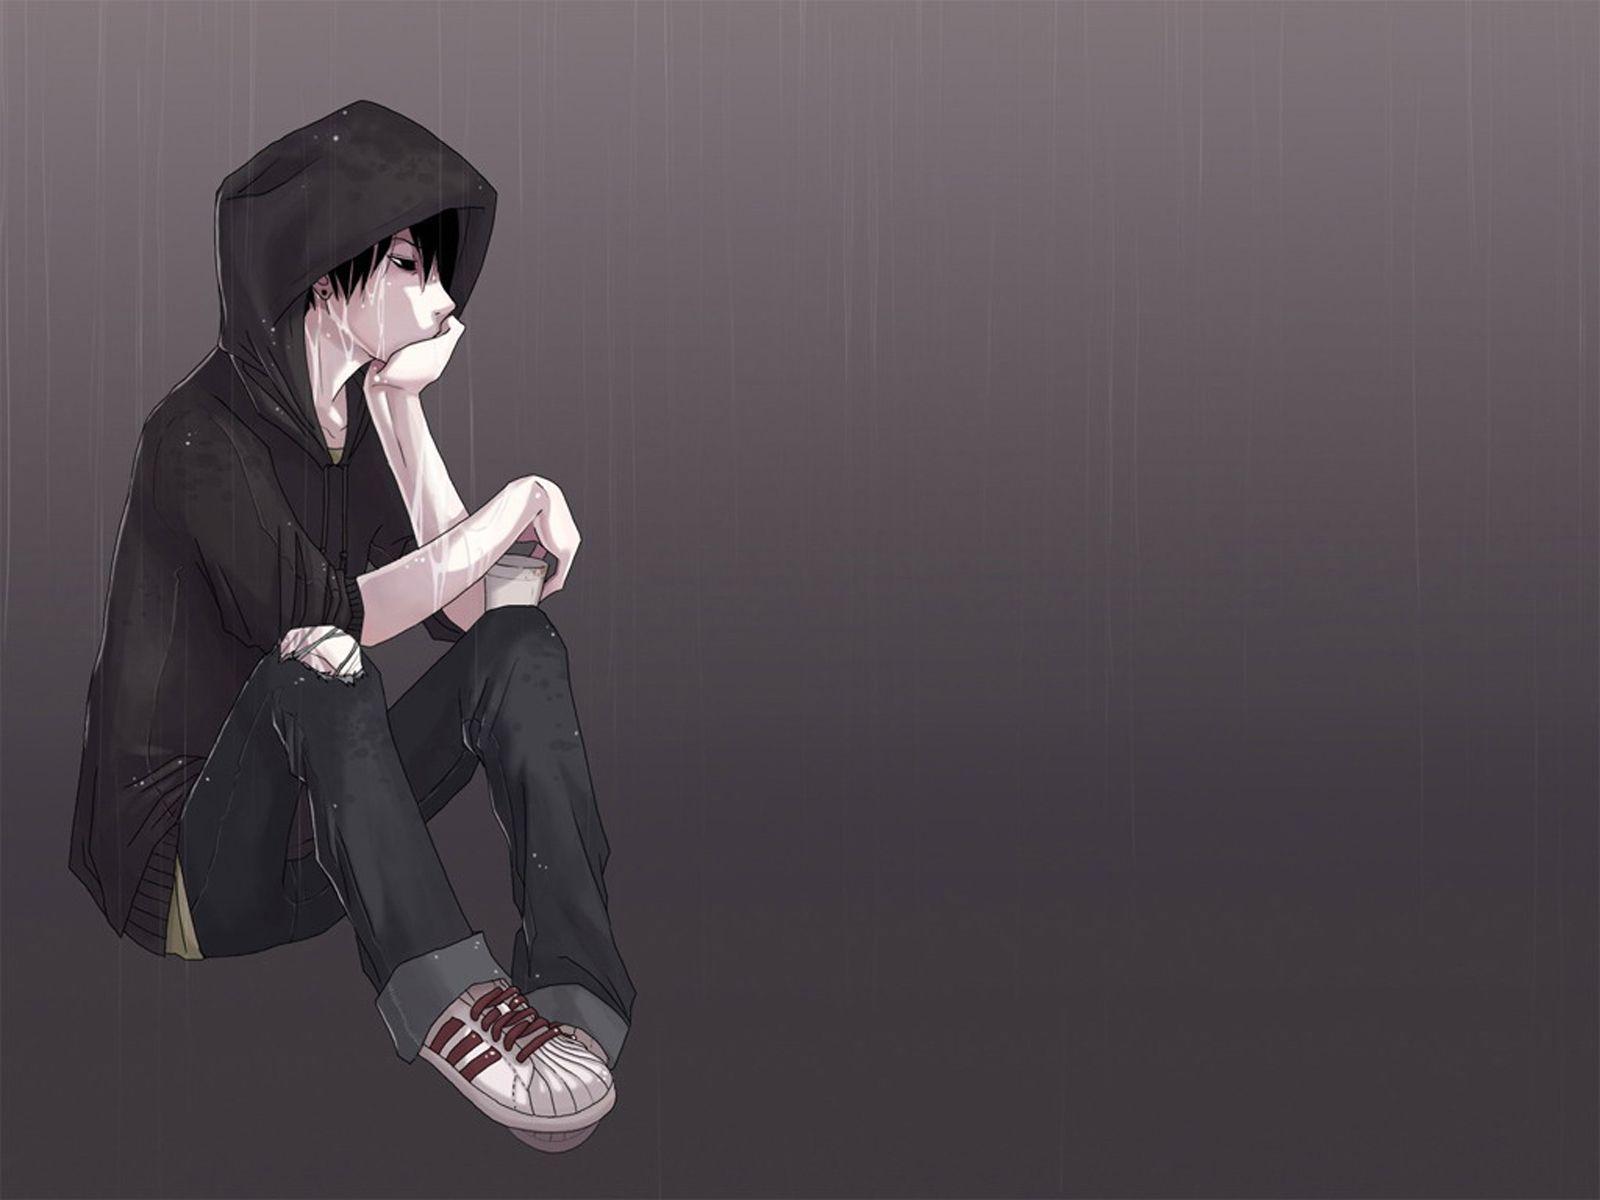 Lonely Emo Boy Sitting in the Rain Wallpaper. Emo Wallpaper. EMO